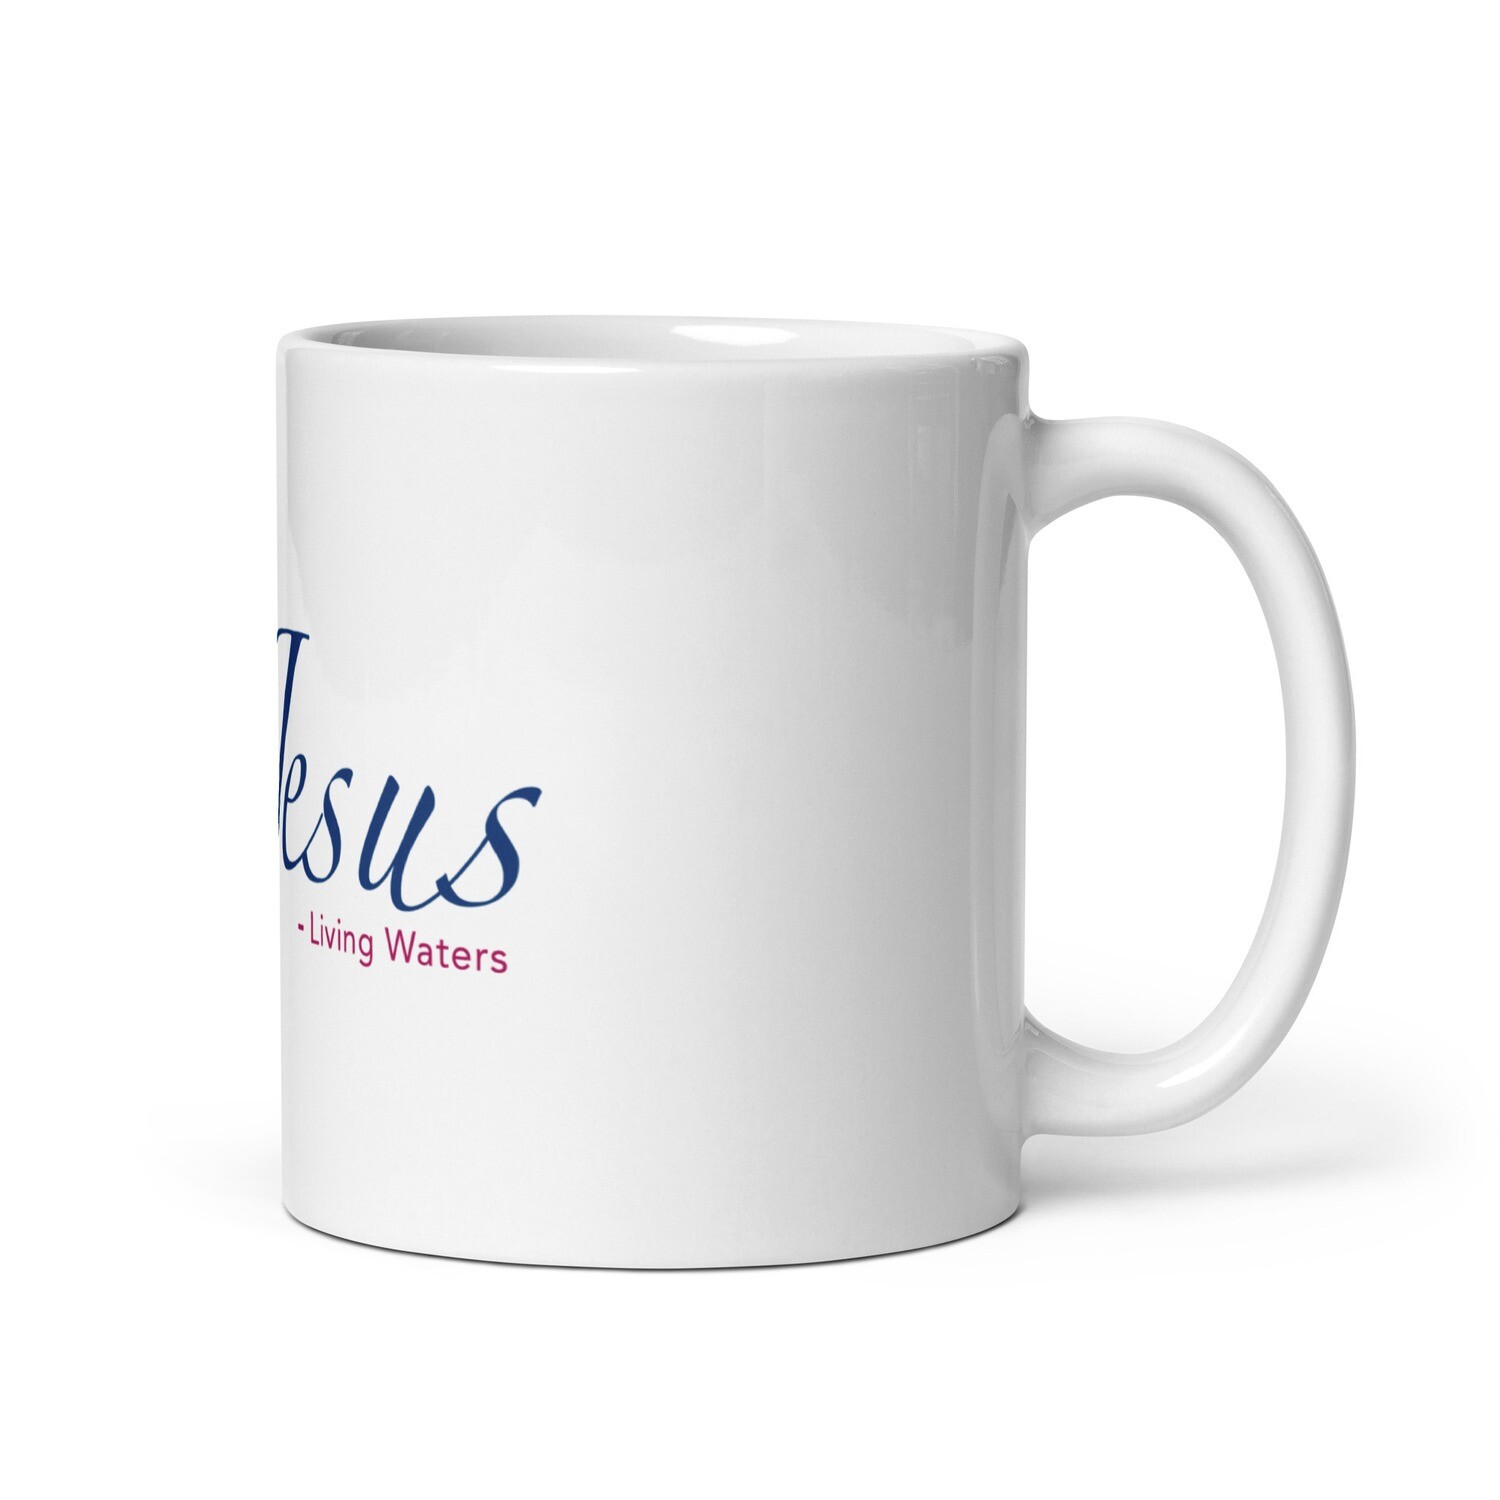 All for Jesus - white glossy mug